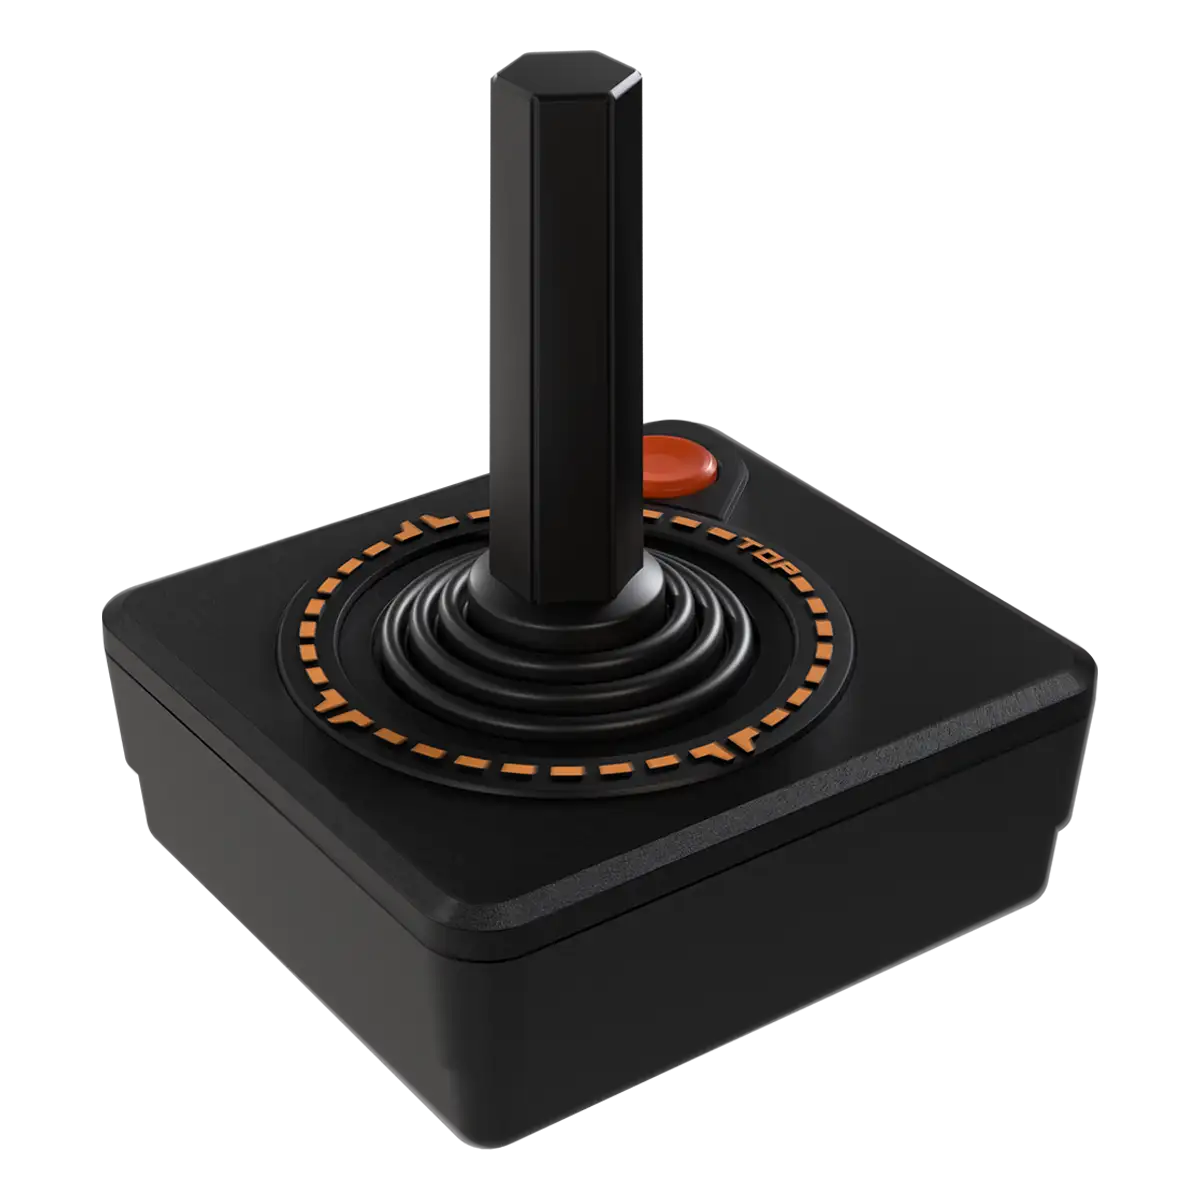 THECXSTICK (Solus Atari USB Joystick - Black) Image 10